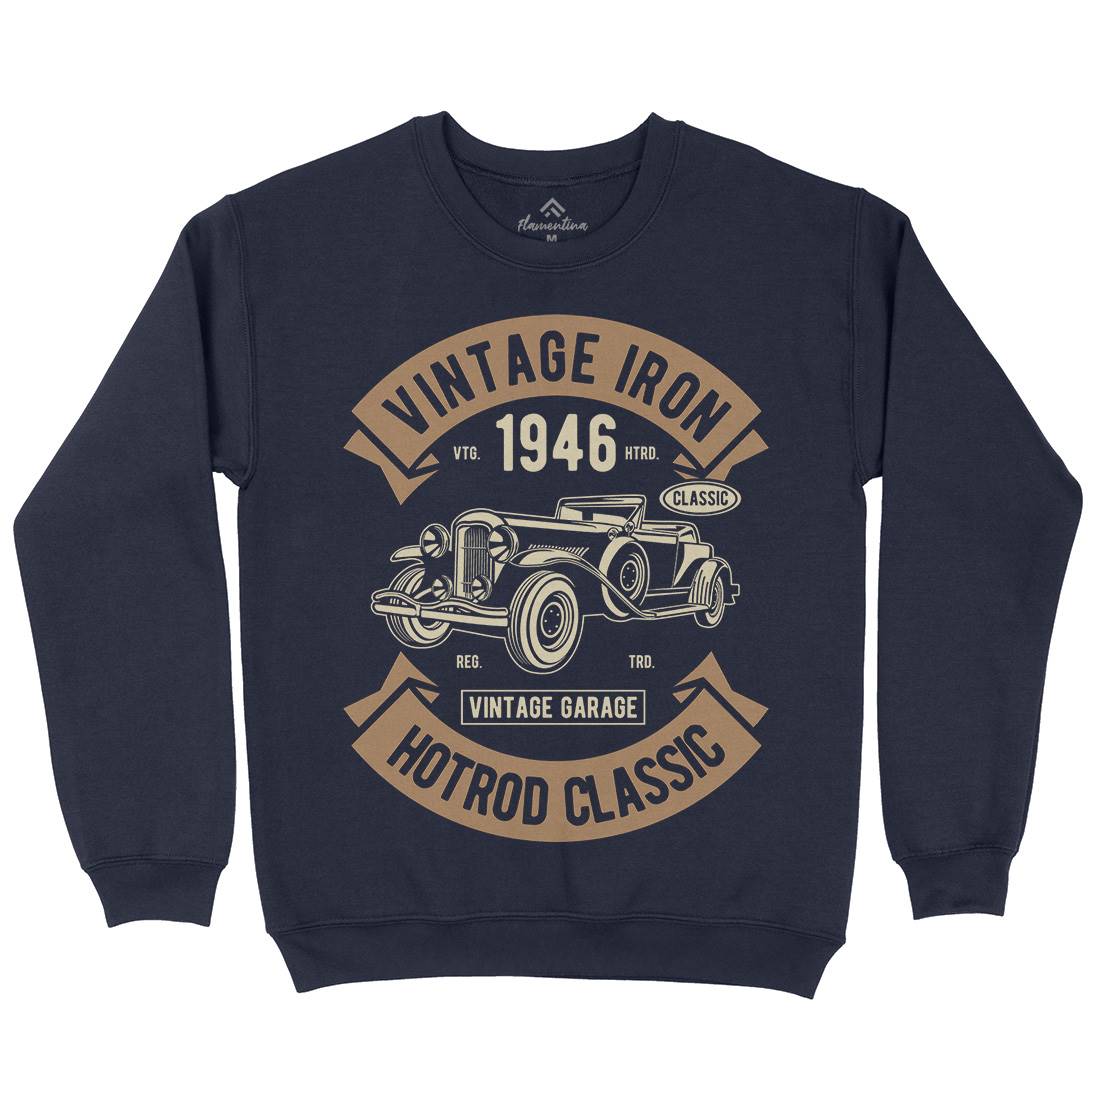 Vintage Iron Classic Kids Crew Neck Sweatshirt Cars D595